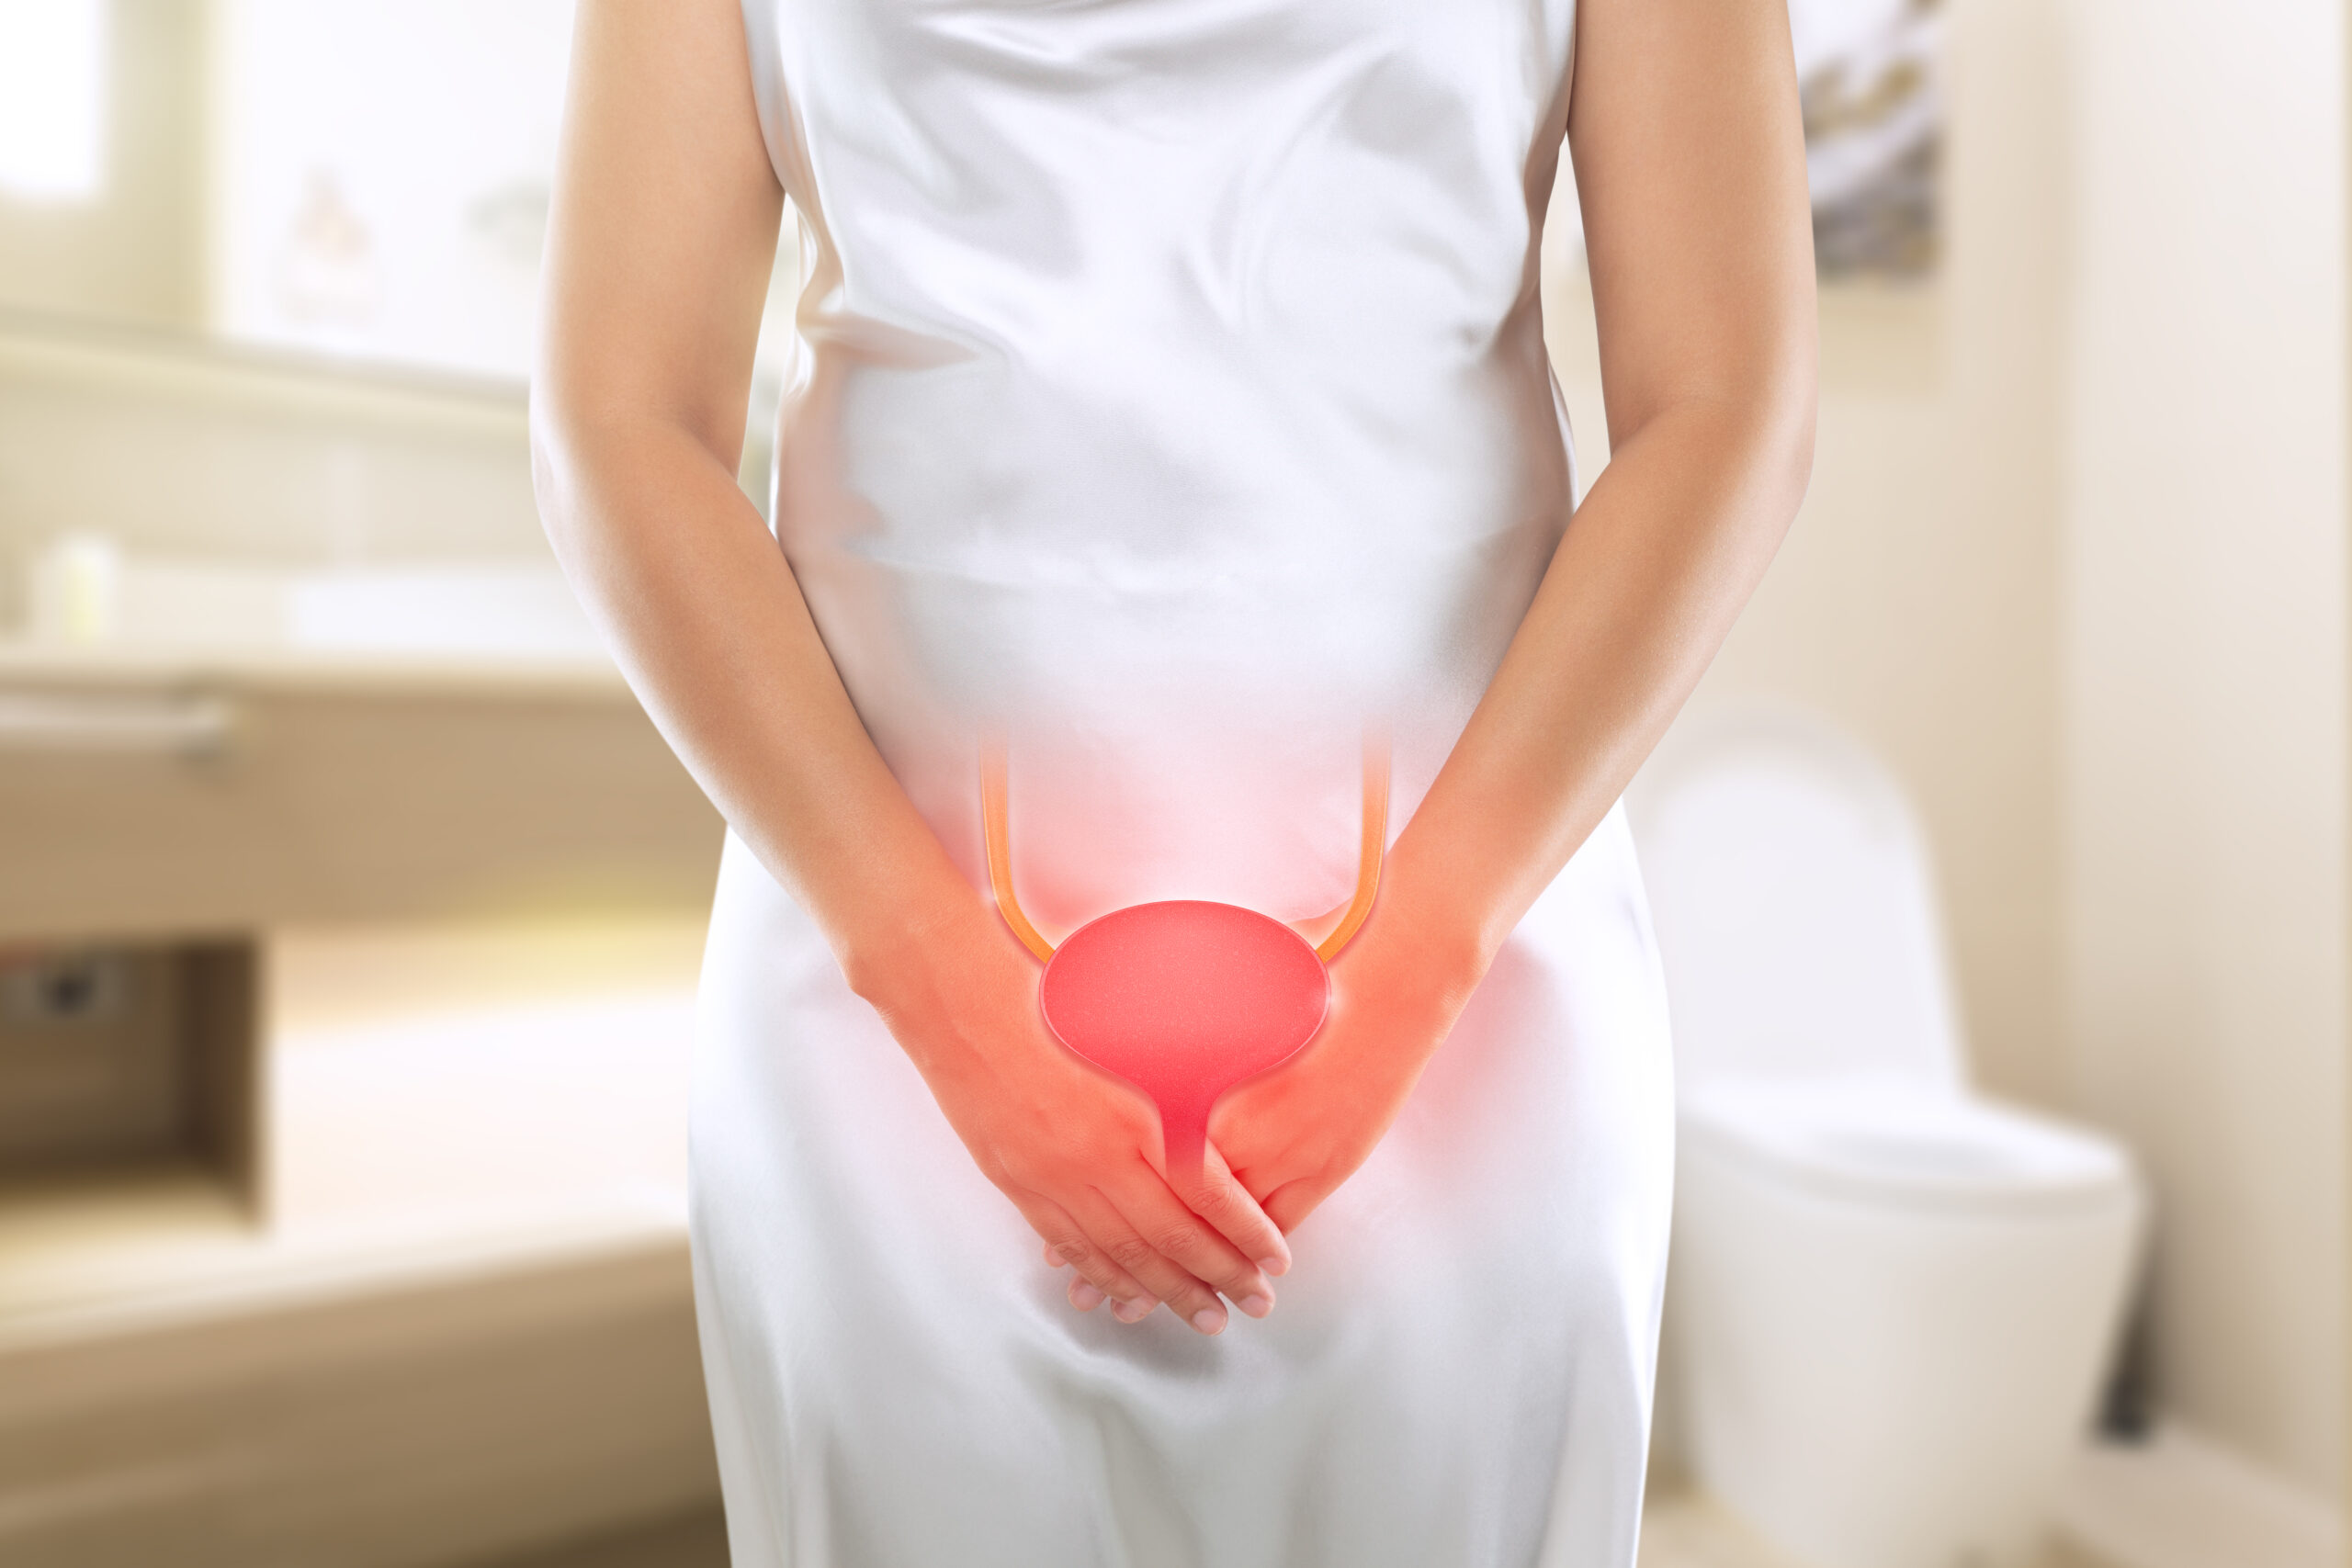 Endometriosis: Causes, Symptoms, Treatments, & More - Neuragenex